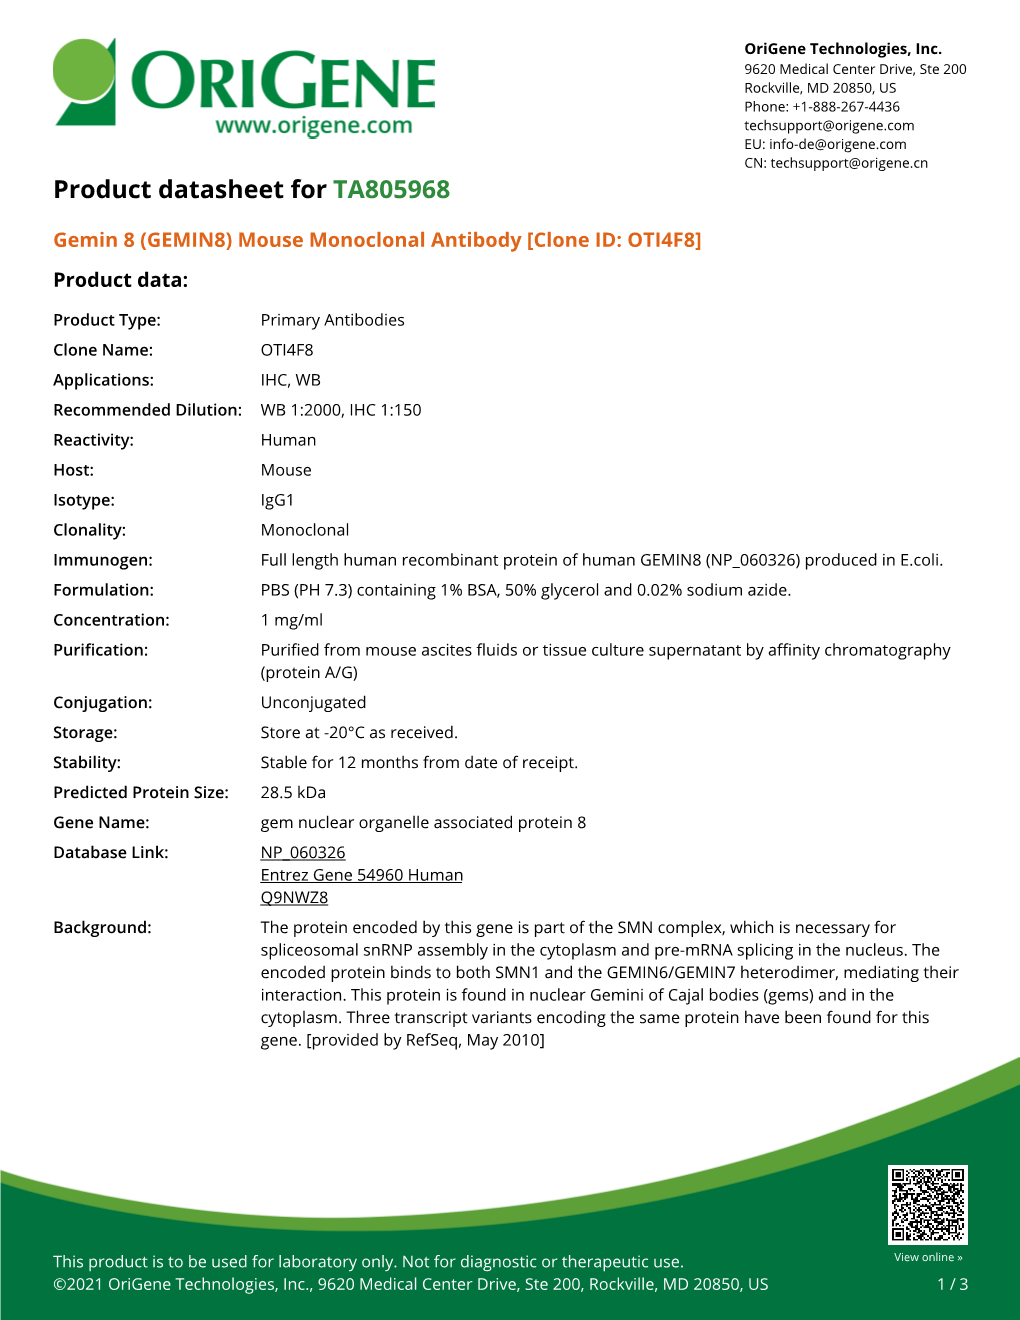 Gemin 8 (GEMIN8) Mouse Monoclonal Antibody [Clone ID: OTI4F8] Product Data